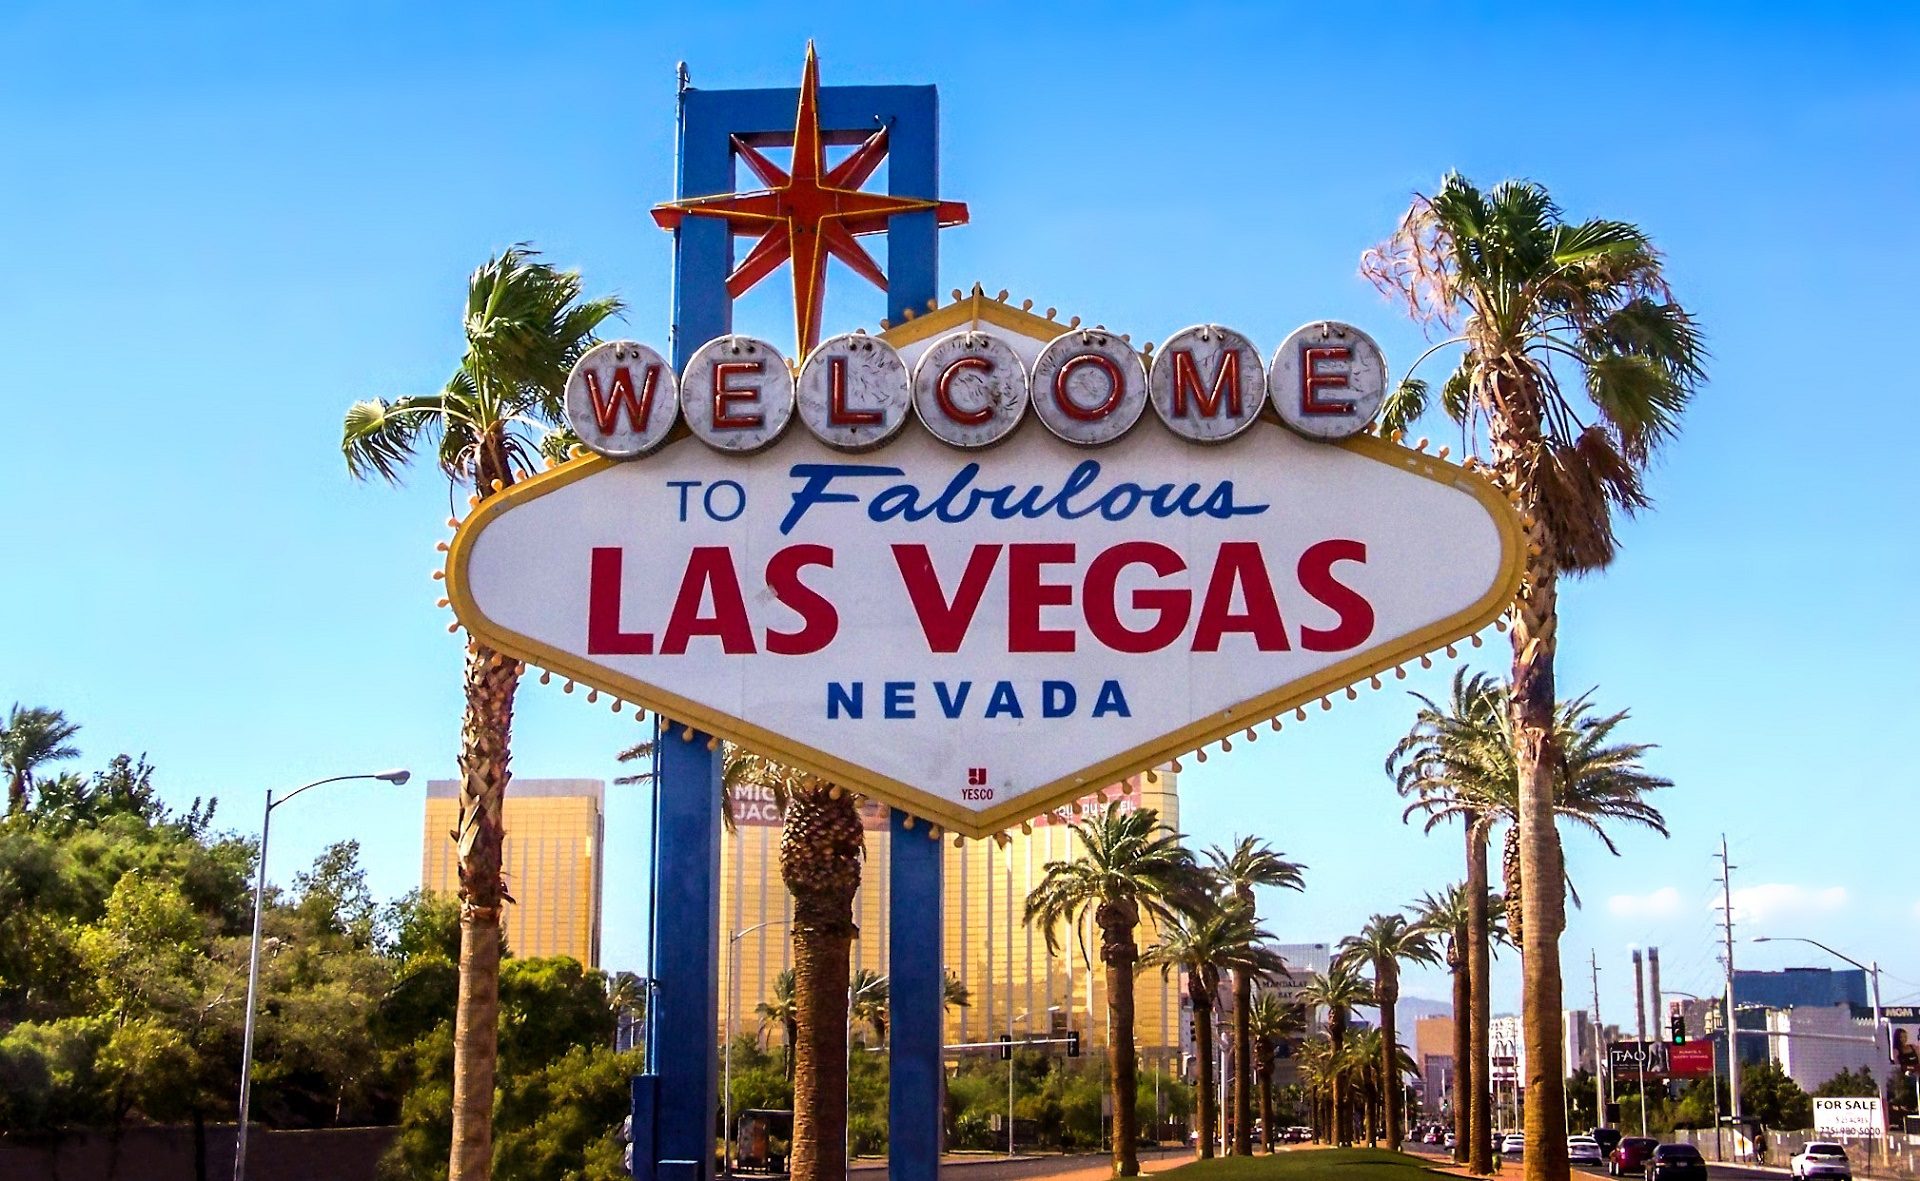 Las Vegas sign, Las Vegas, Nevada